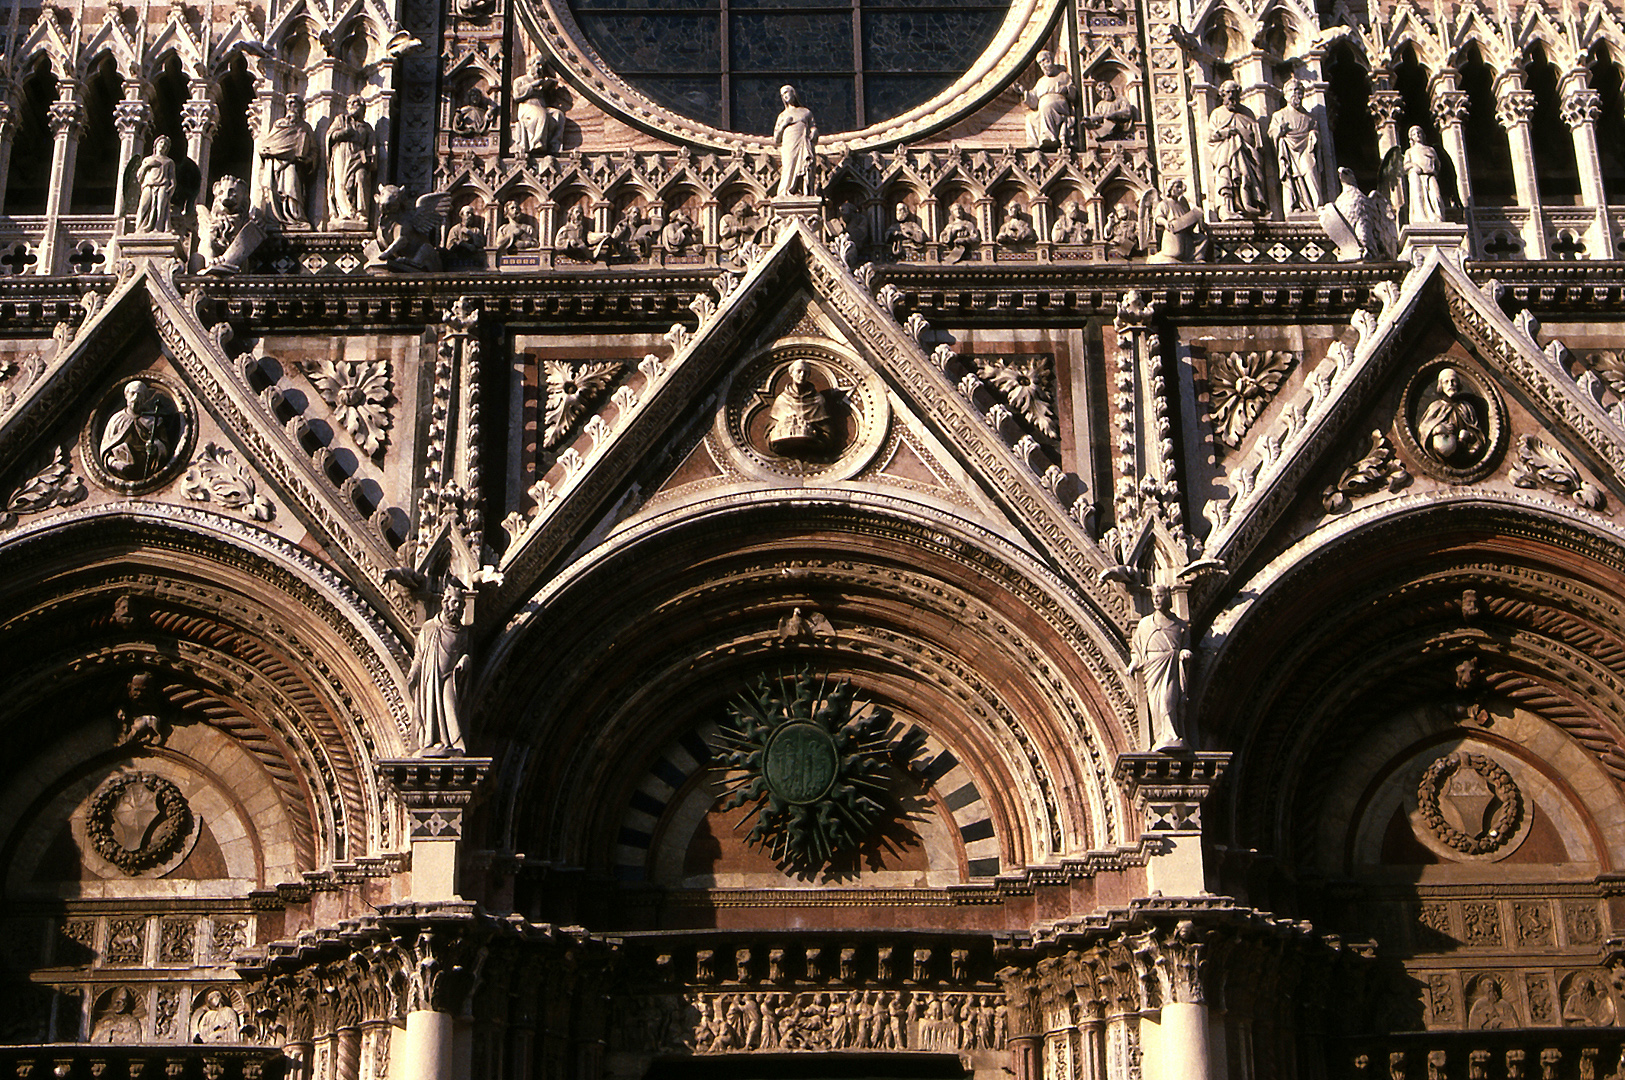 Kathedraal van Siena (Toscane, Italië), Siena Cathedral (Tuscany, Italy)